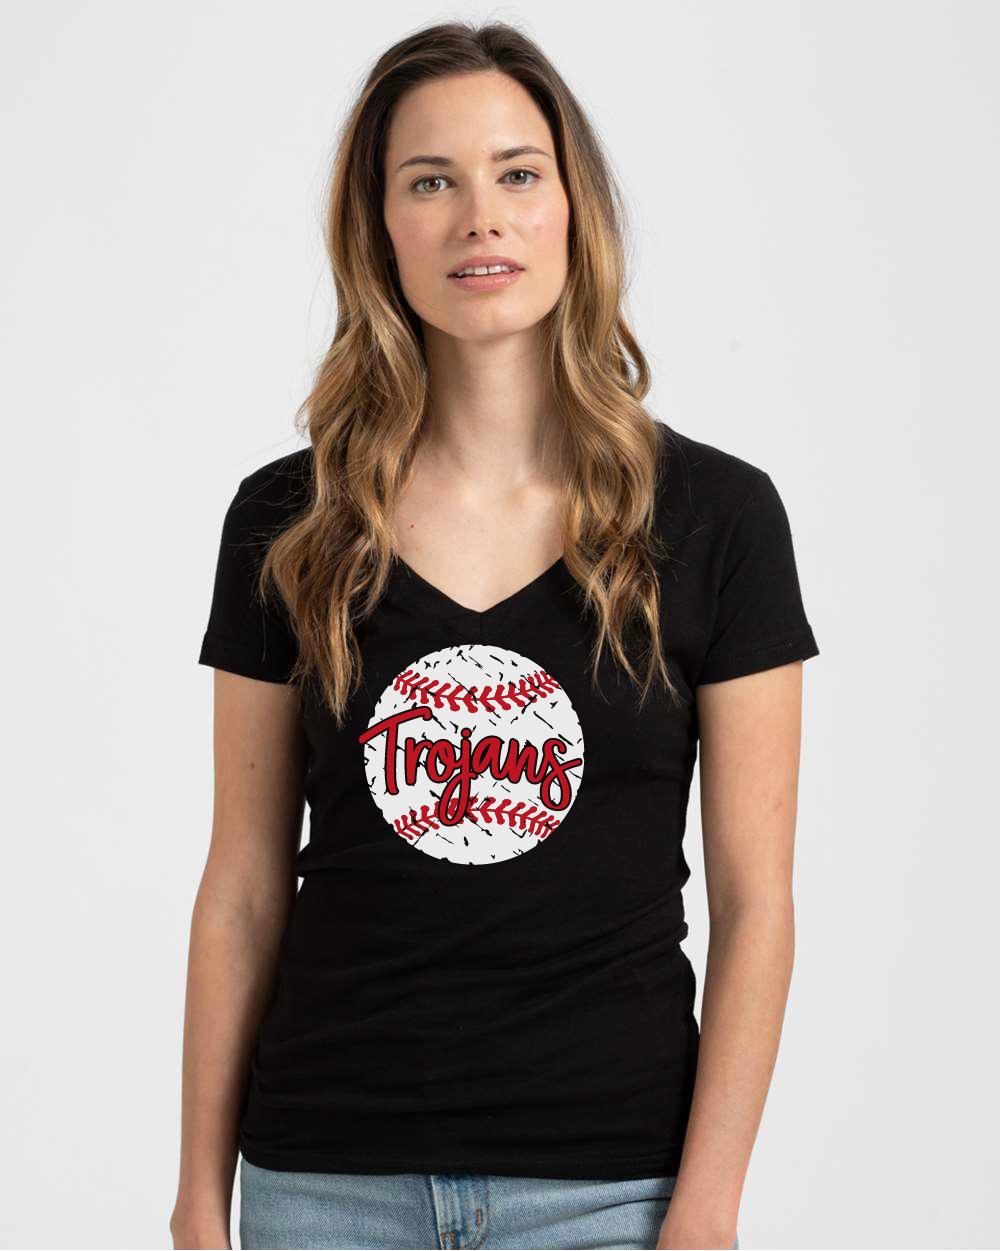 Trojans Baseball Shirt - CGB